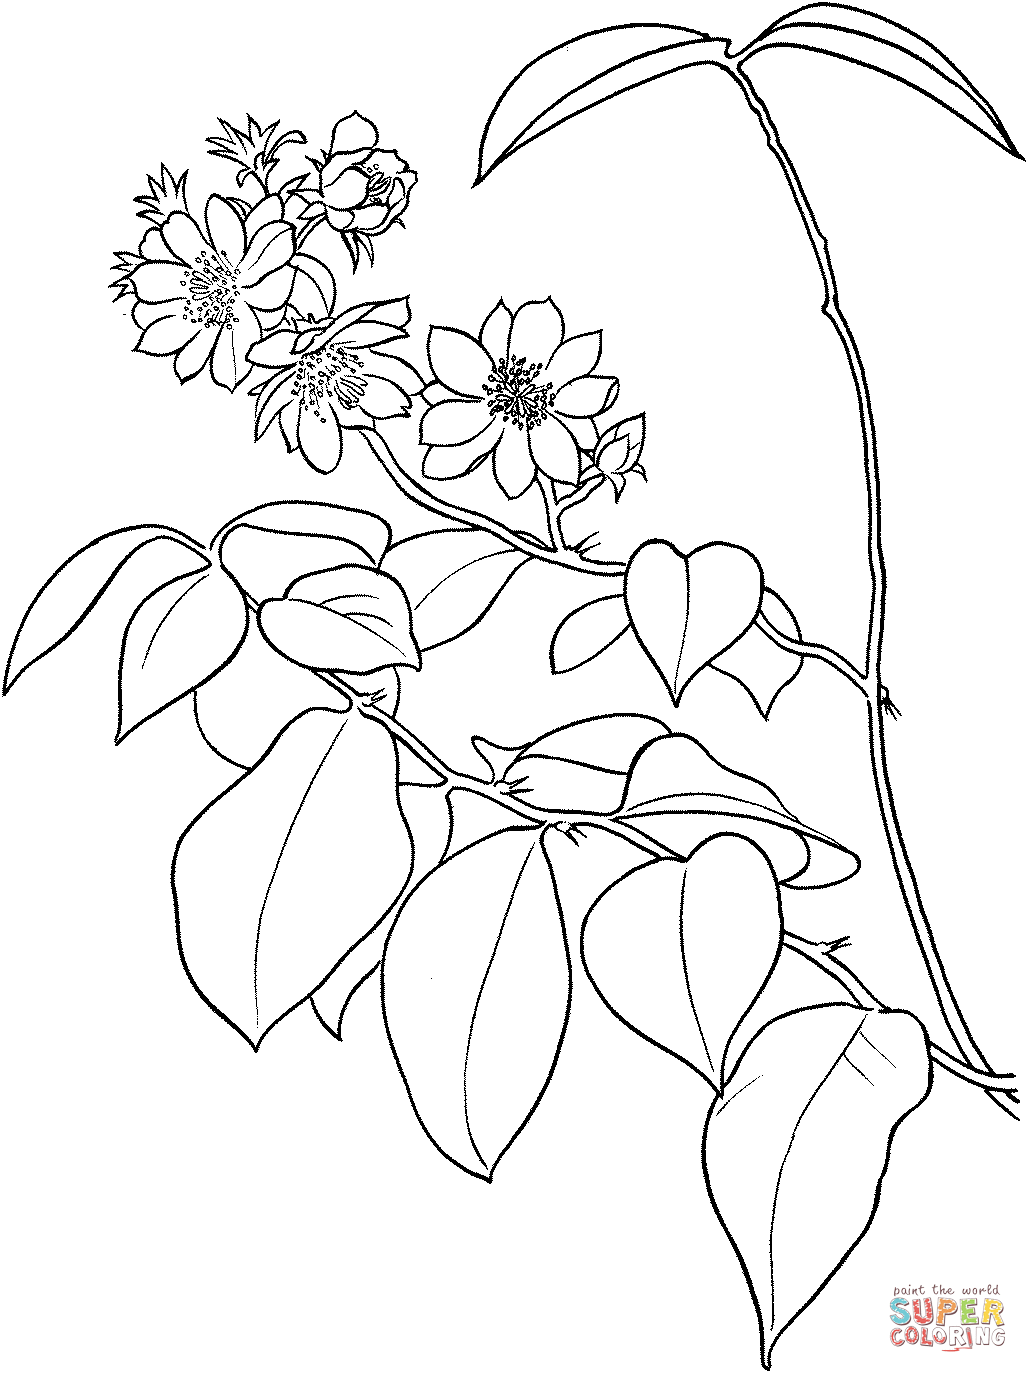 Pereskia Aculeata oder Barbados-Stachelbeere oder Blattkaktus vom Kaktus